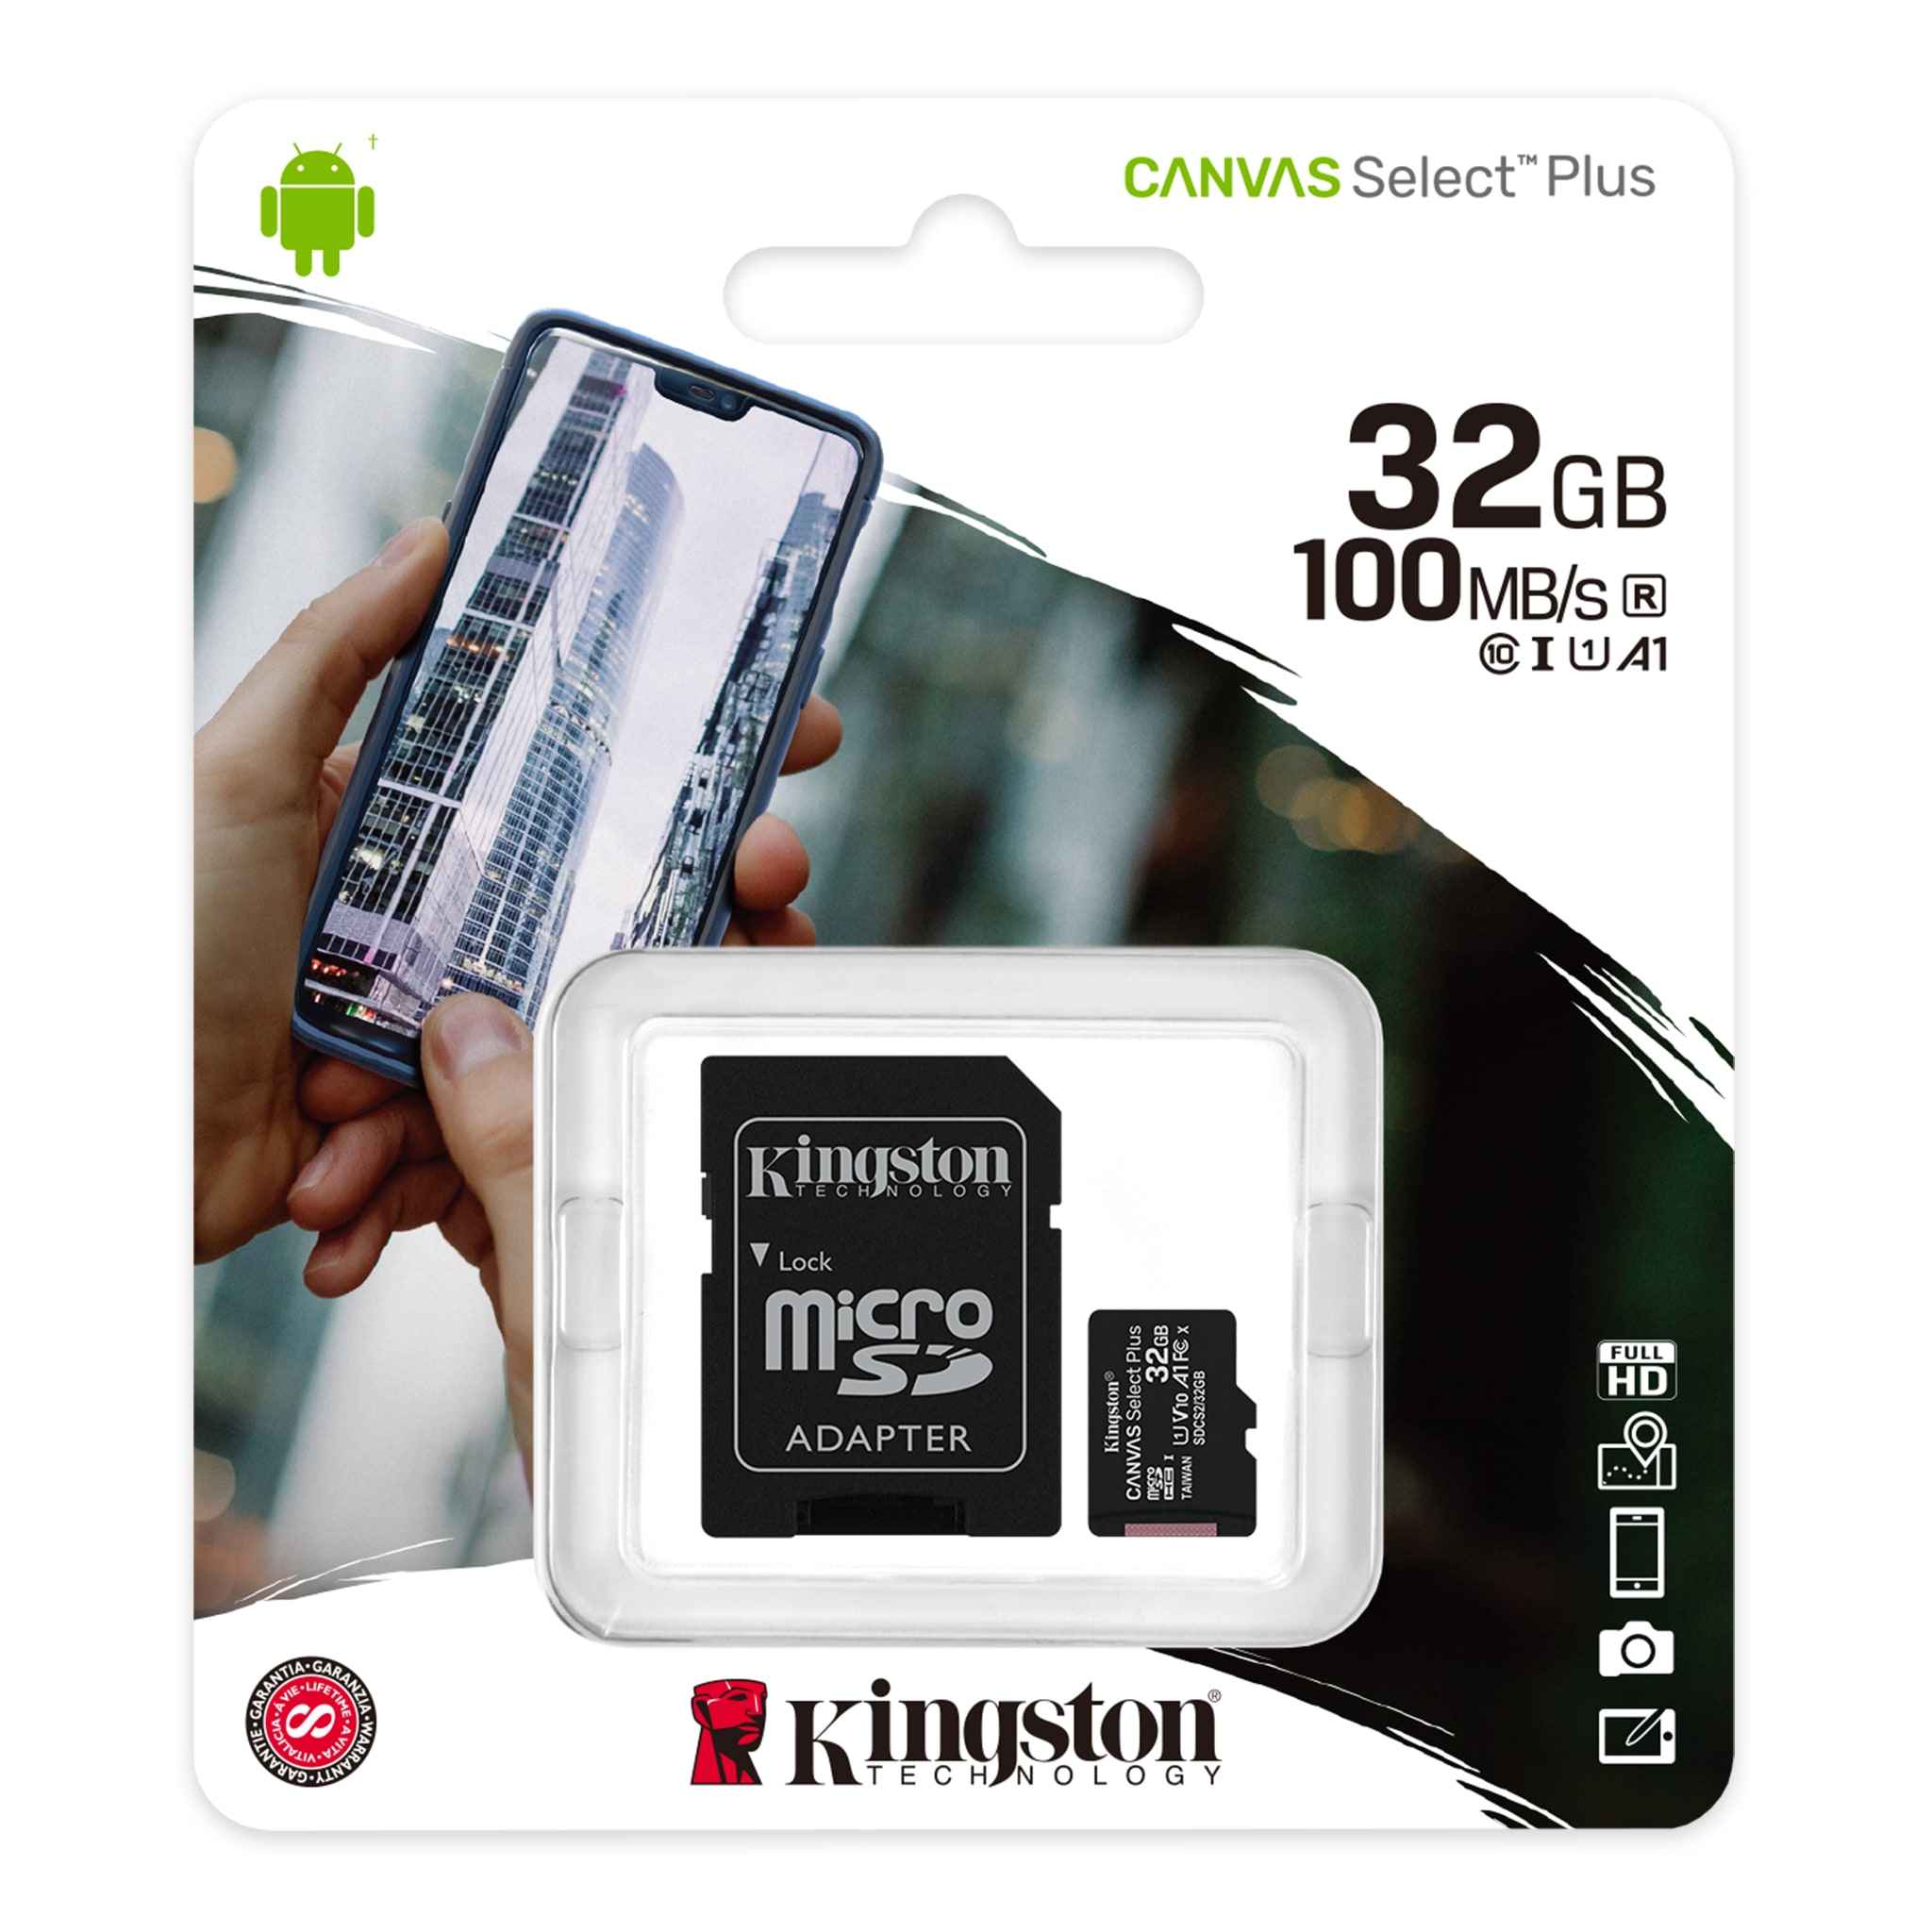 Kingston 32GB Zen Mobile Ultrafone Megashot 1 MicroSDHC Canvas Select Plus Card Verified by SanFlash. 100MBs Works with Kingston 